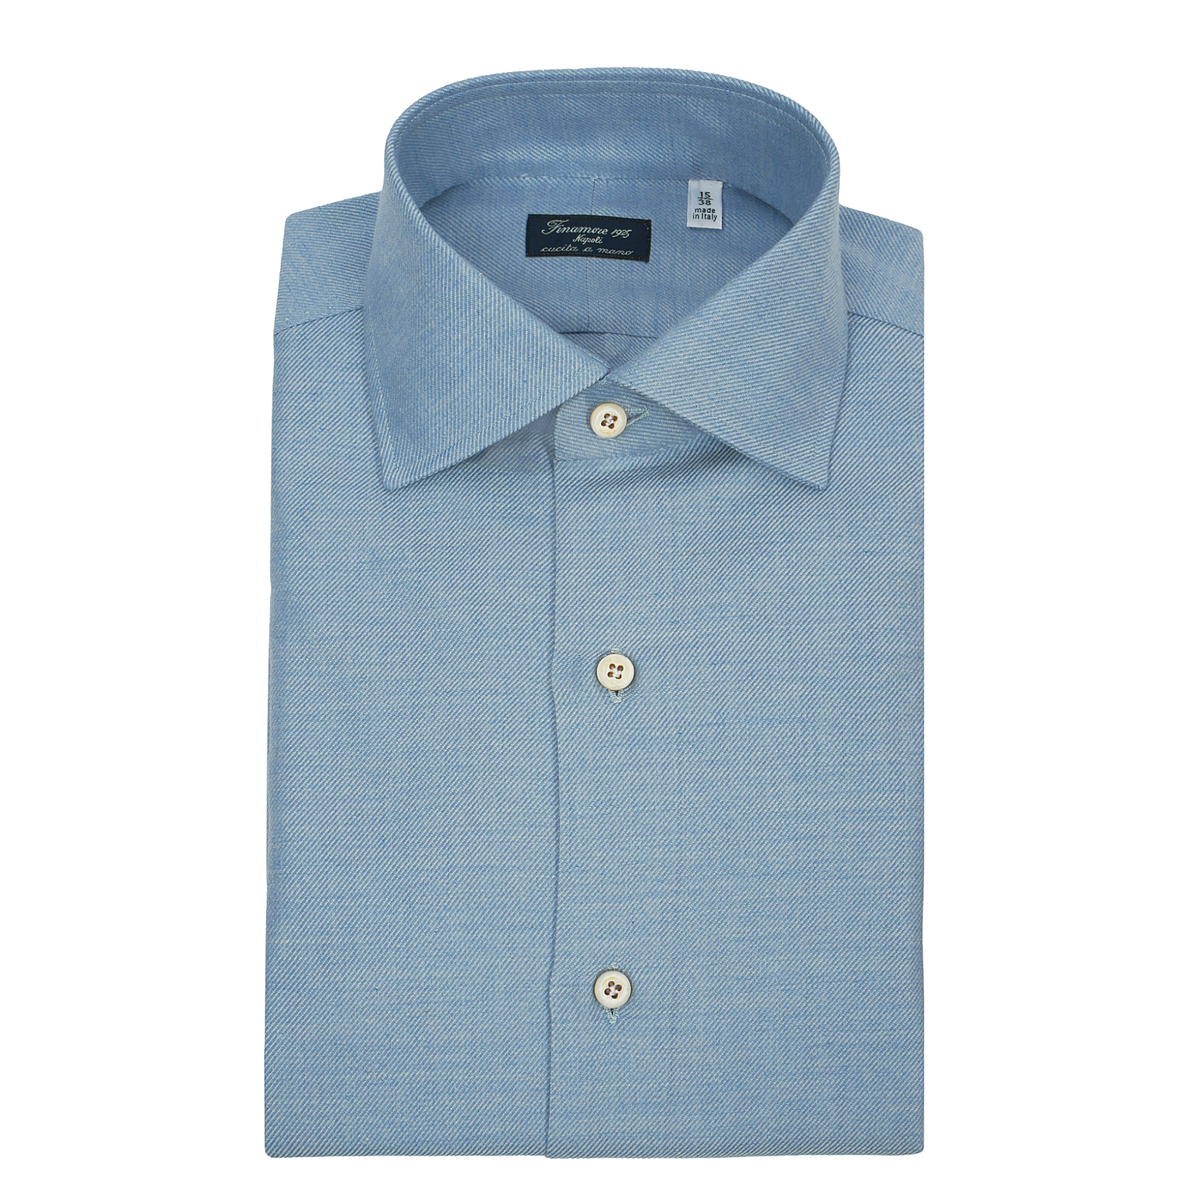 Napoli Fake denim shirt in cashmere cotton and silk light blue silk